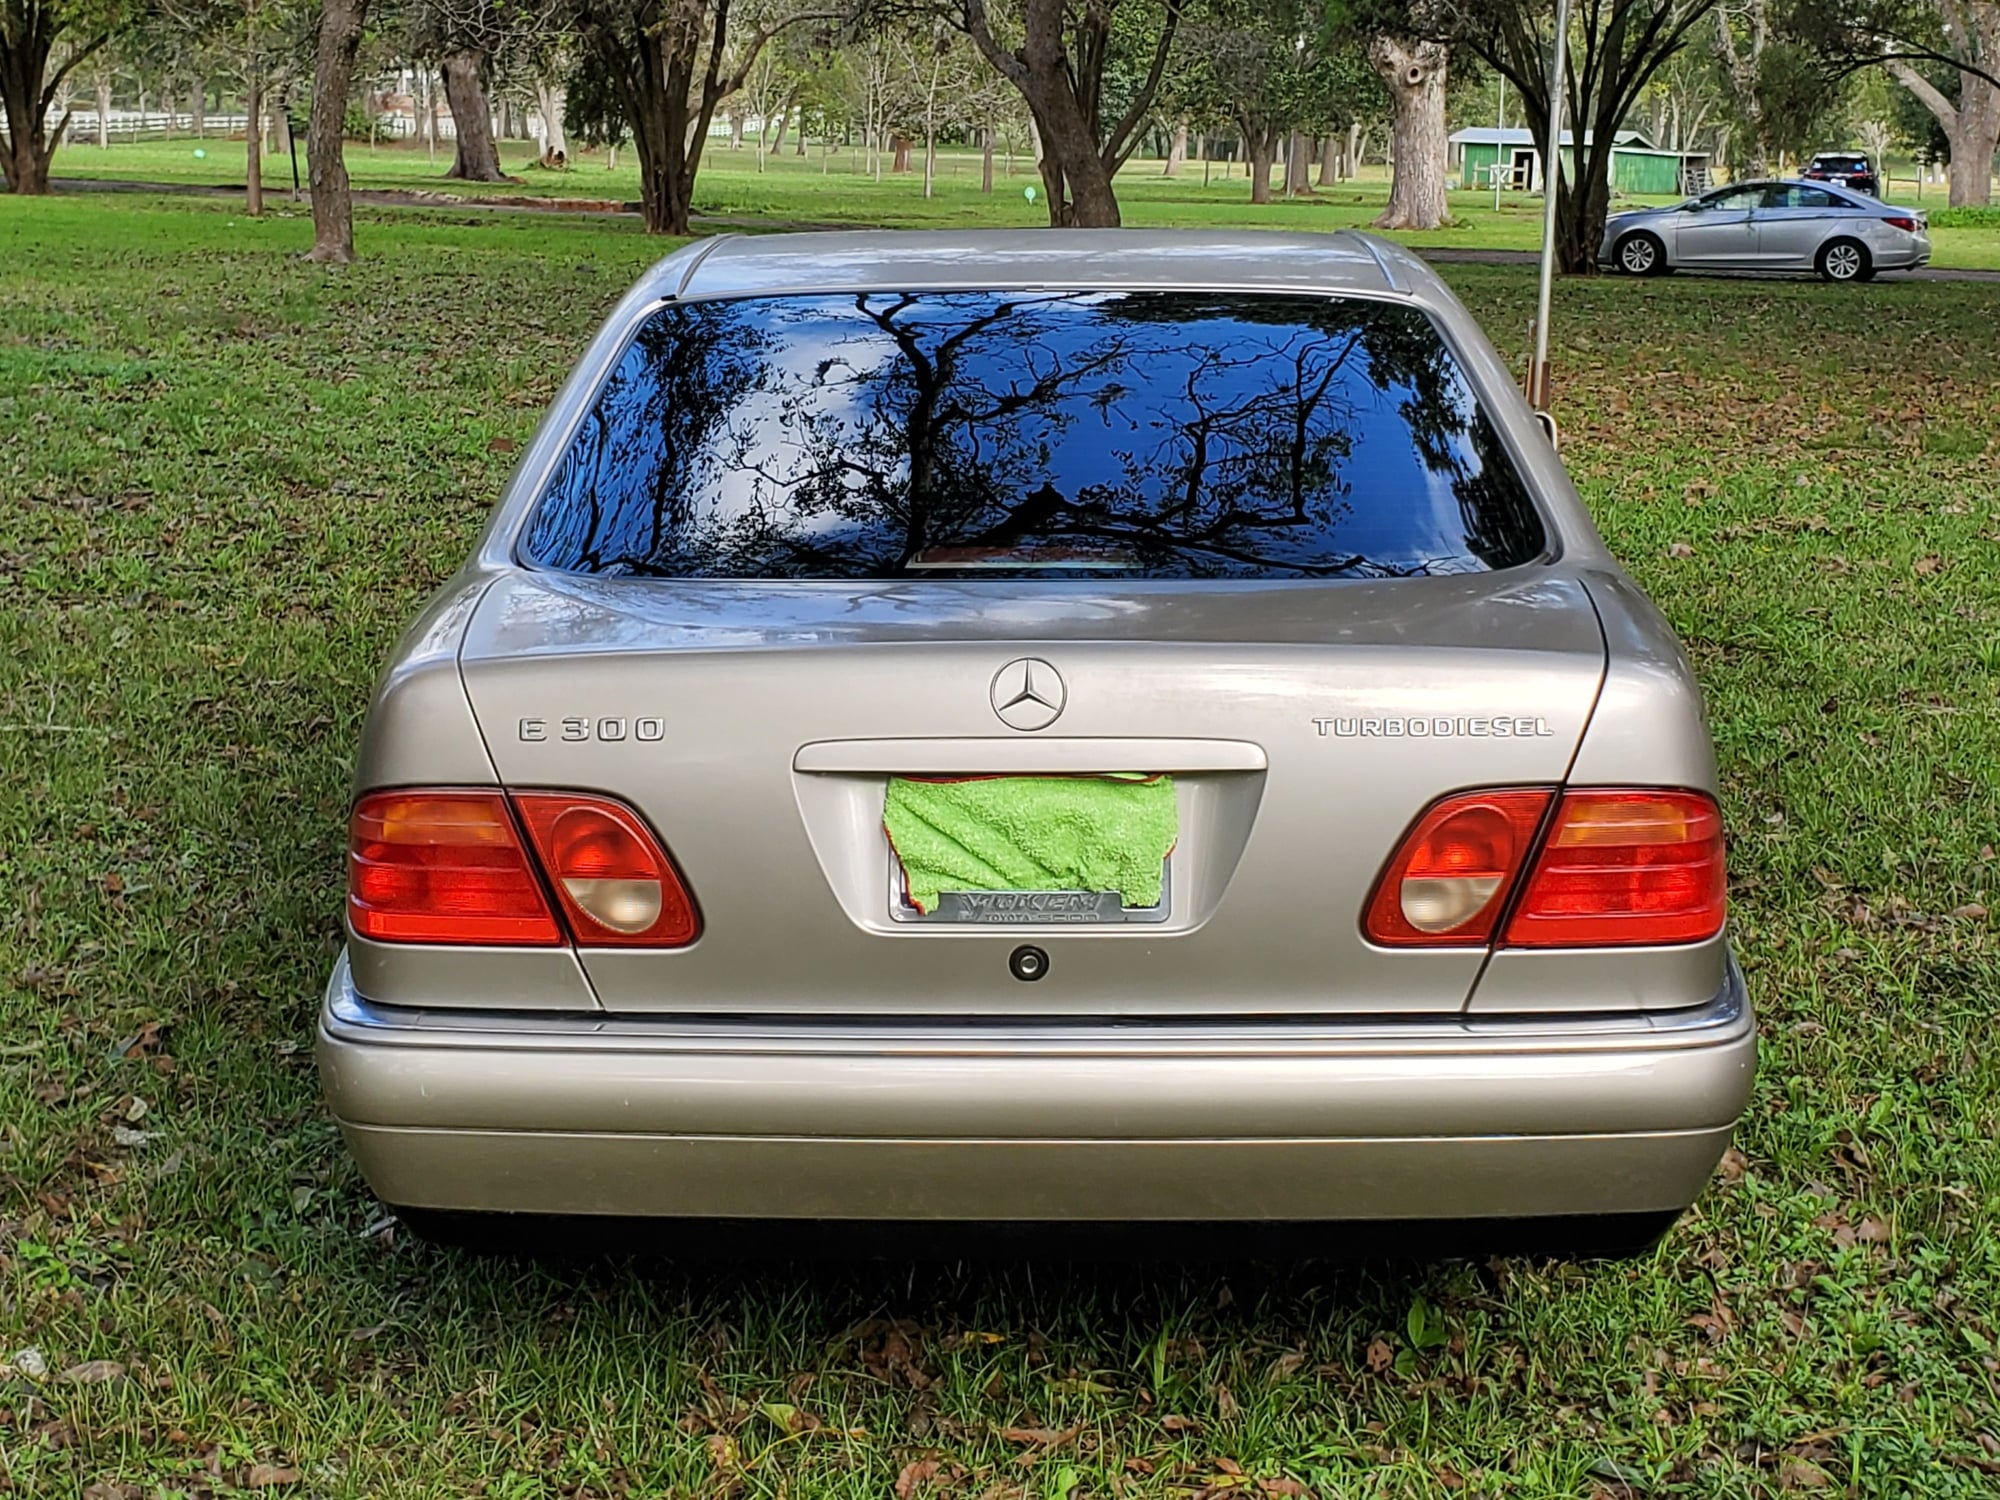 1999 Mercedes-Benz E300 - 1999 Mercedes Benz E300TD - Used - VIN Wdbjf25h9xa937168 - 123,850 Miles - 6 cyl - 2WD - Automatic - Sedan - Beige - Sugarland, TX 77479, United States